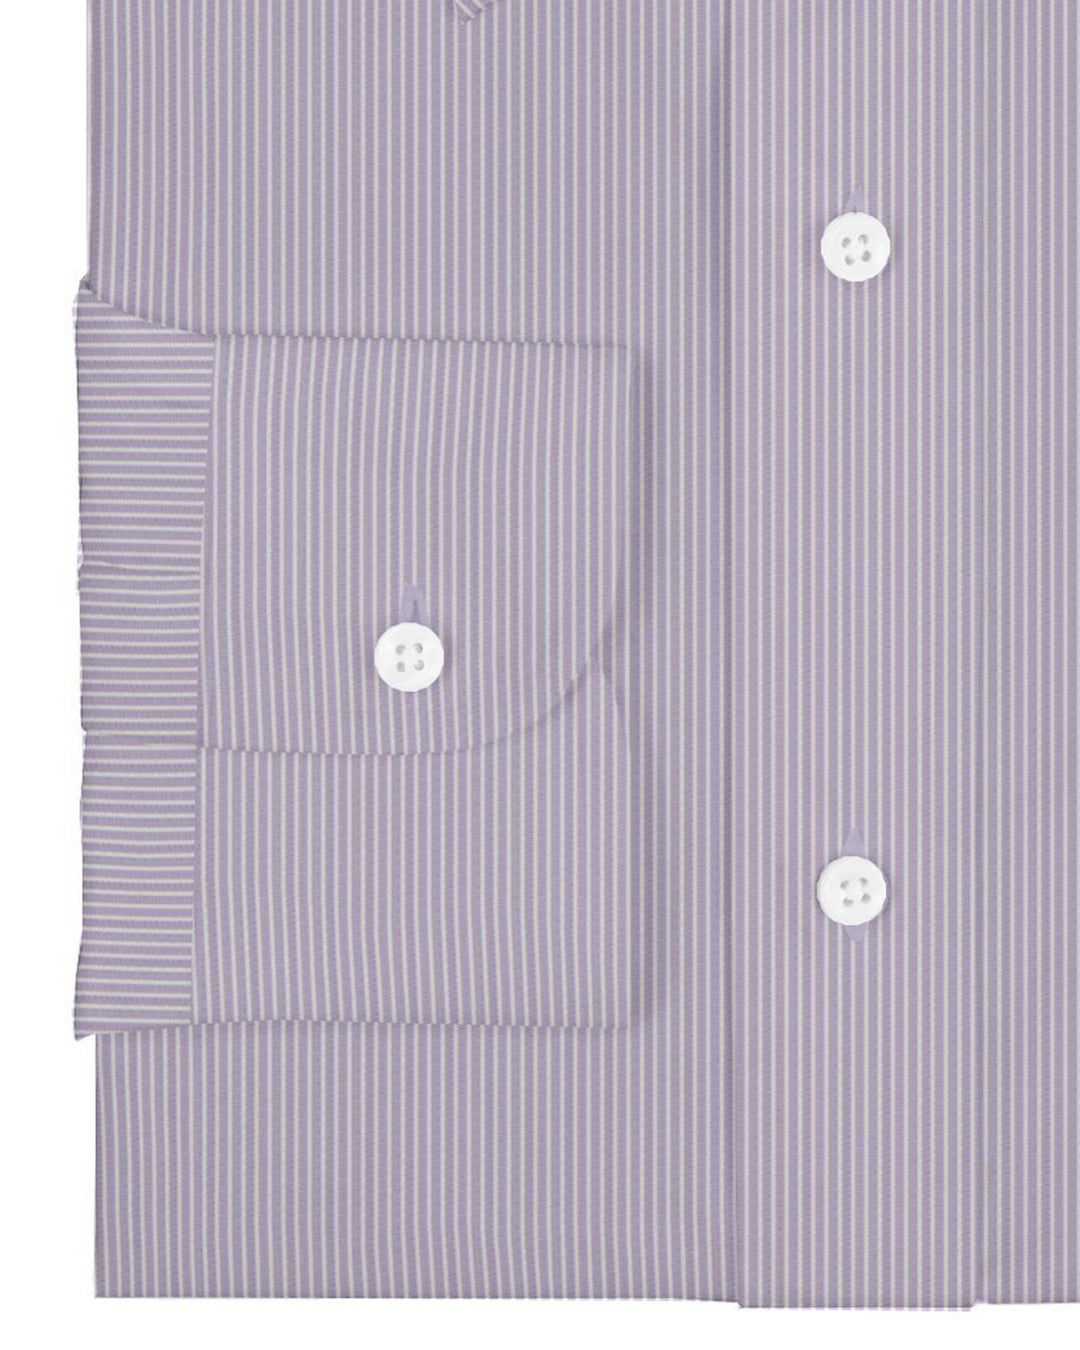 White Pin Stripes On Purple